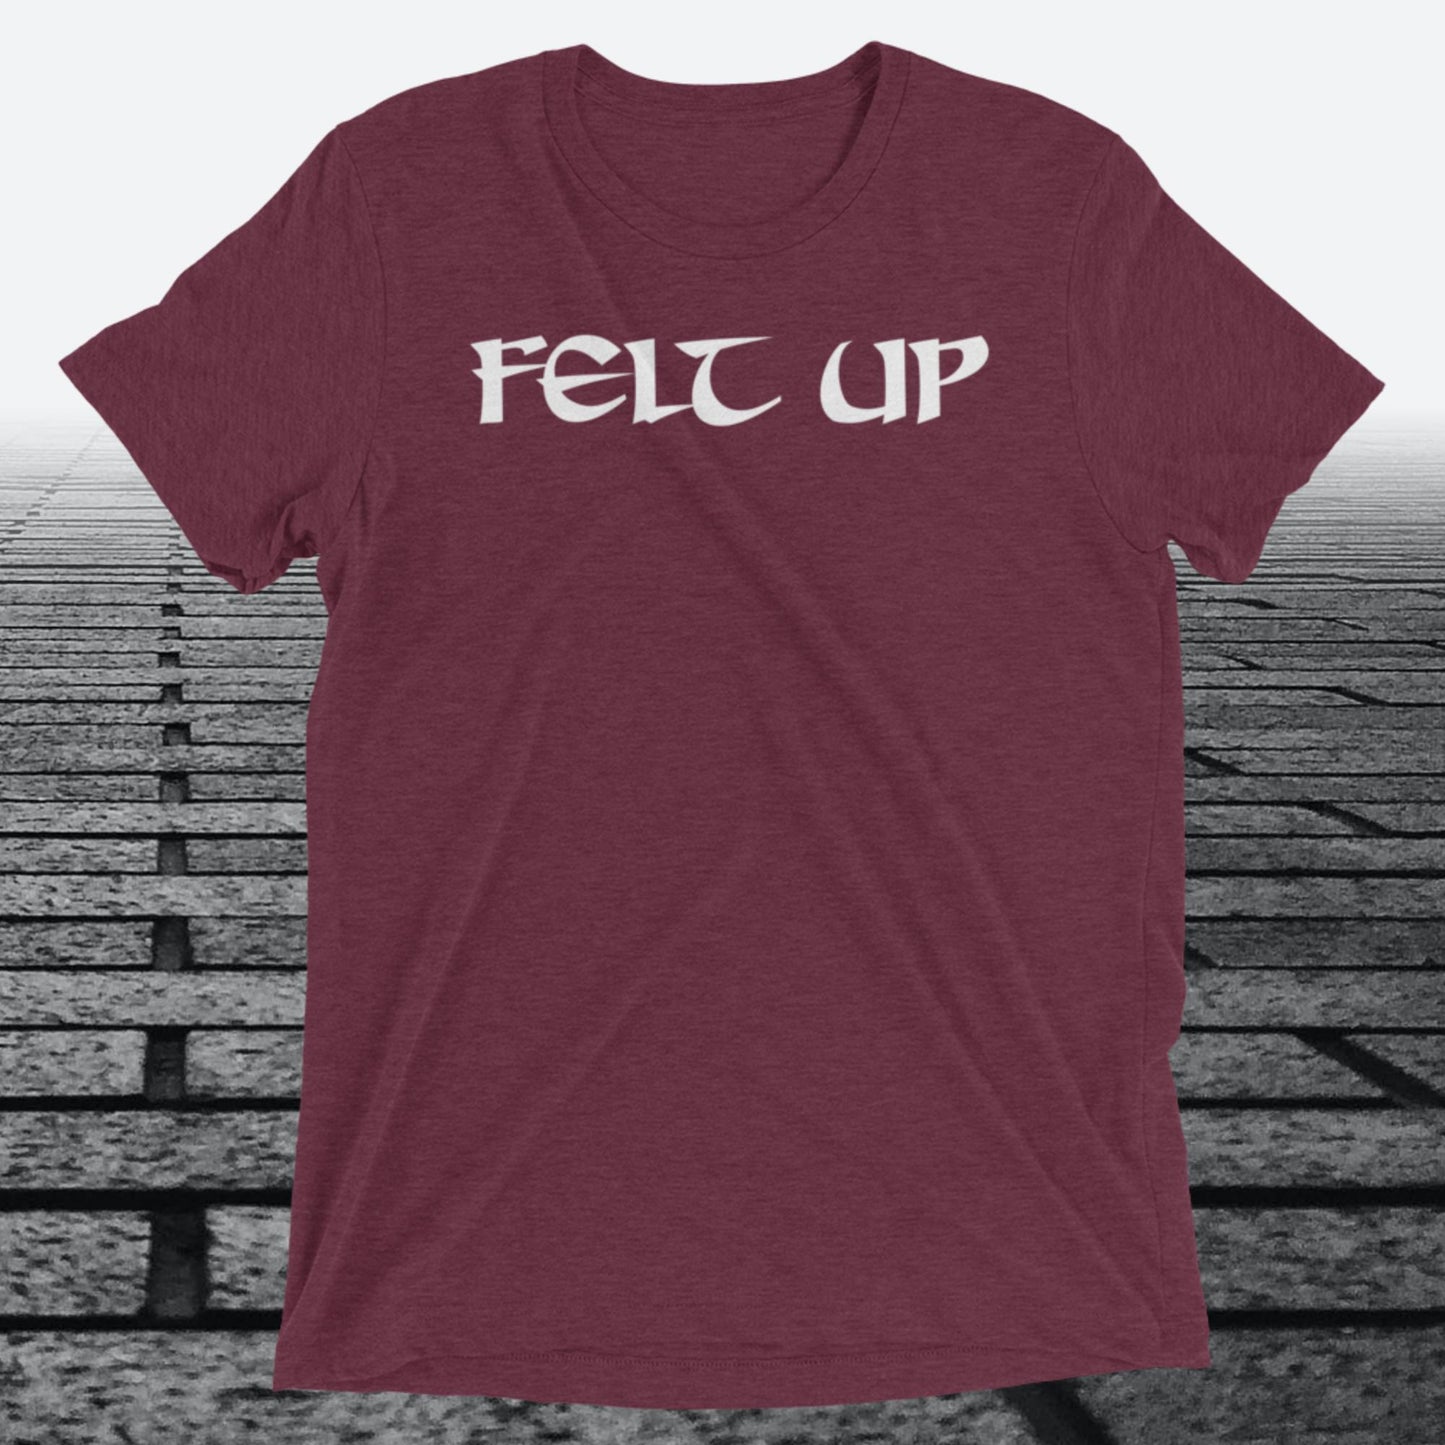 Felt Up, with logo on the back, Tri-blend t-shirt